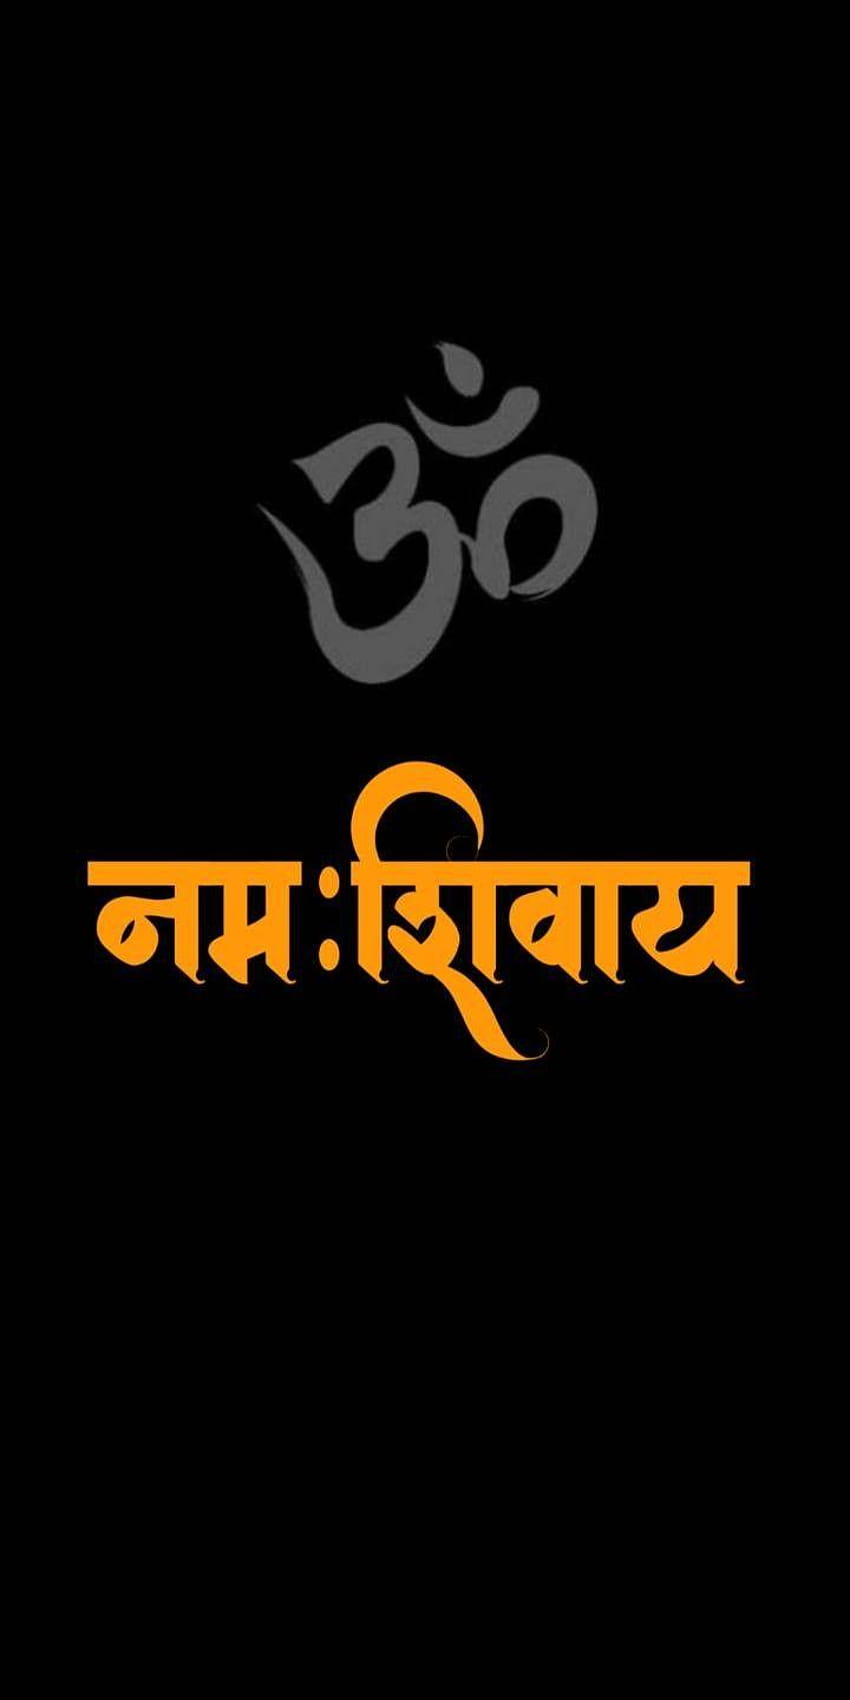 Mahakal Calligraphy Vector, Mahakal, Mahakal Hindi Logo, Mahakal  Calligraphy In Hindi PNG and Vector with Transparent Background for Free  Download